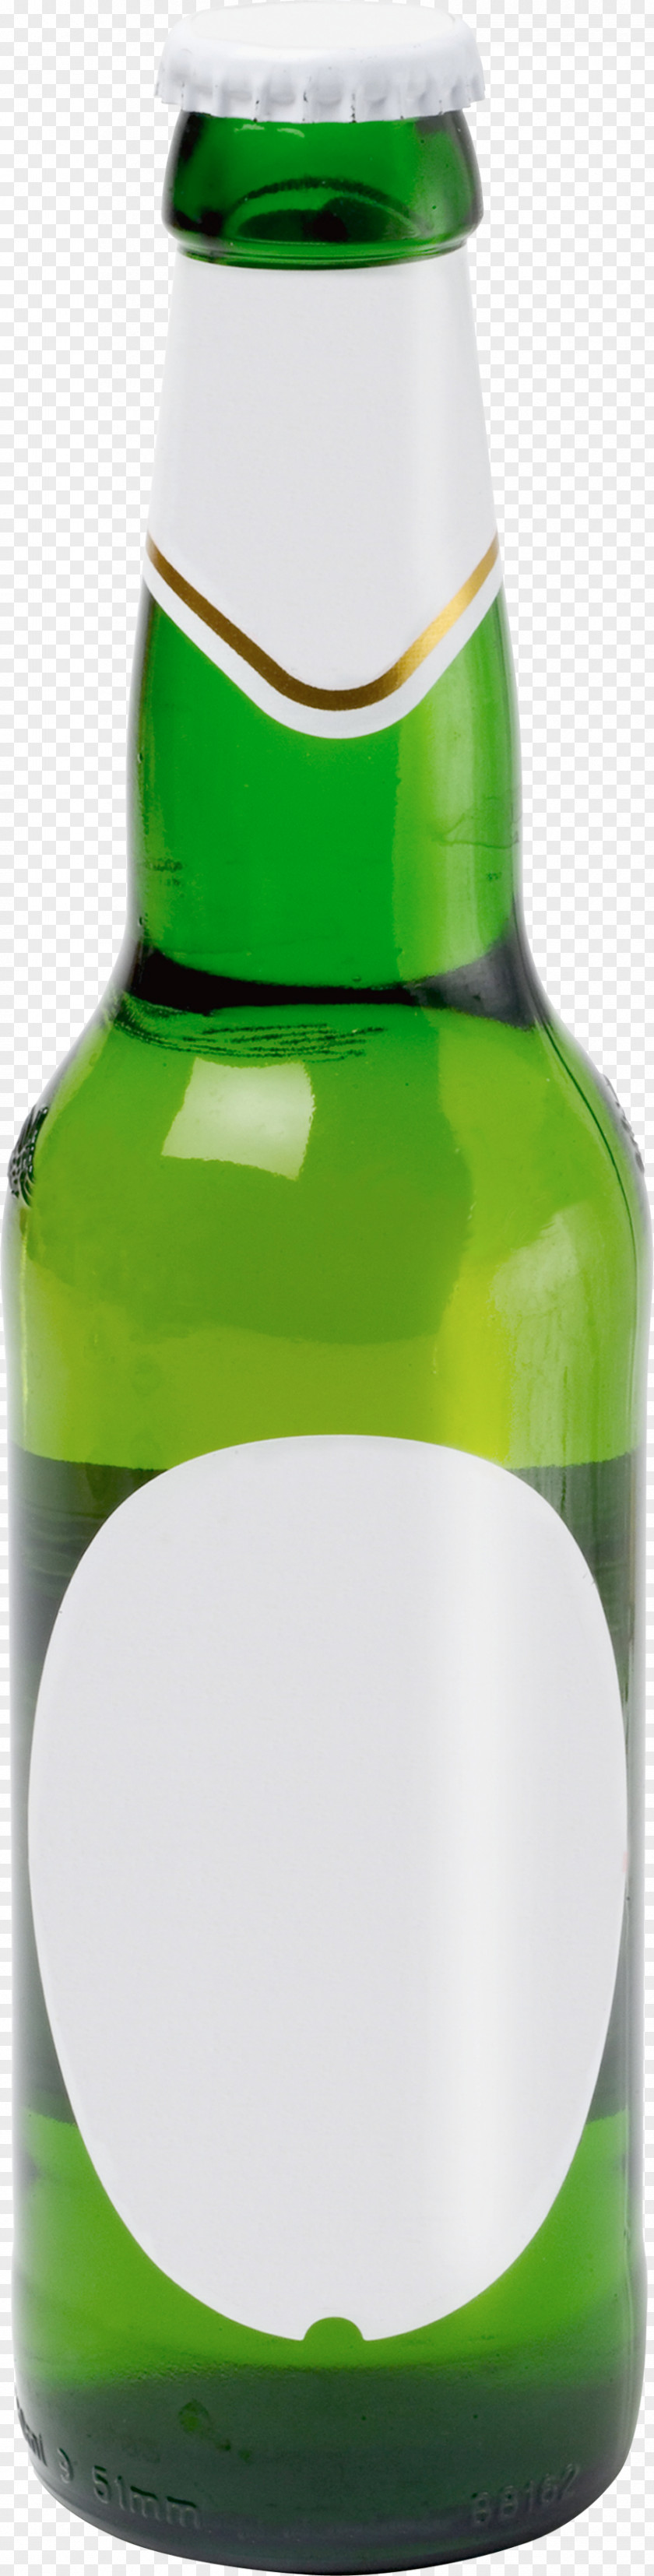 Beer Bottle Butylka PNG